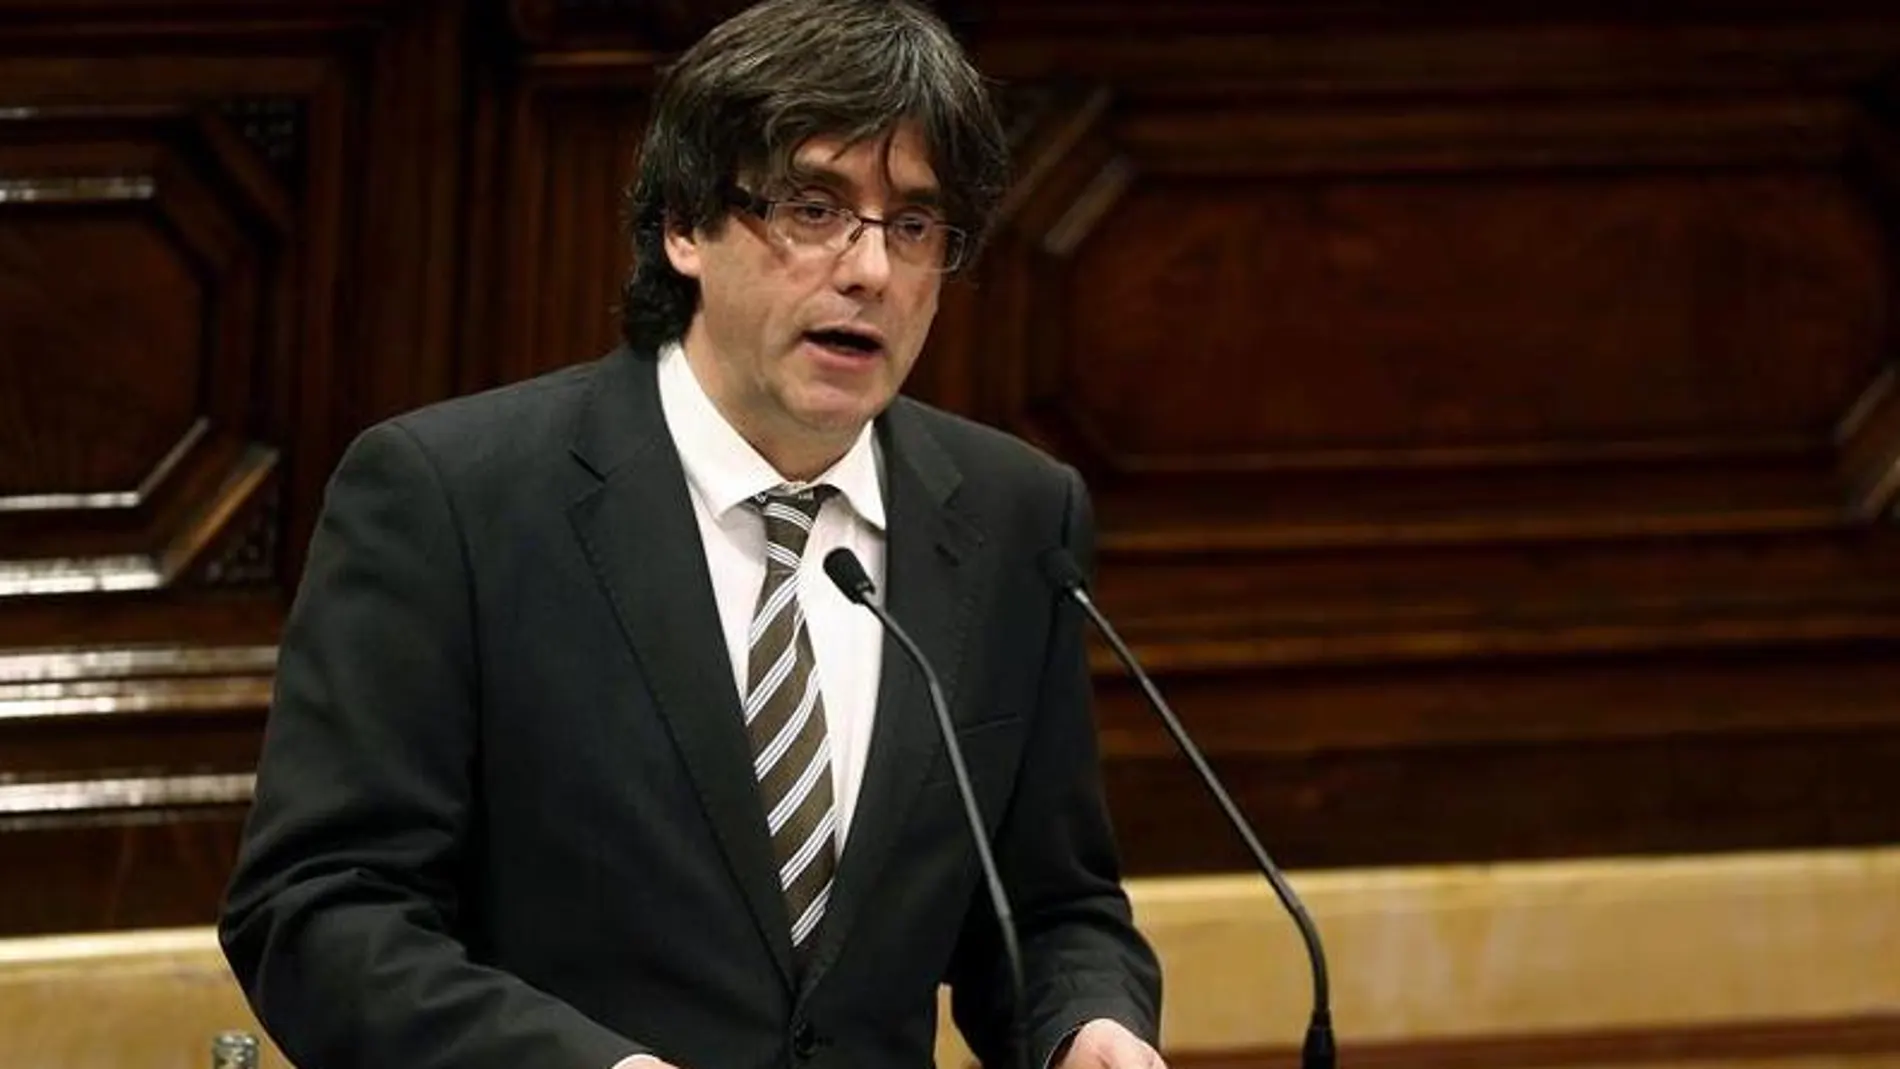 El candidato de Junts pel Sí a la Presidencia de la Generalitat, Carles Puigdemont, pronuncia su discurso